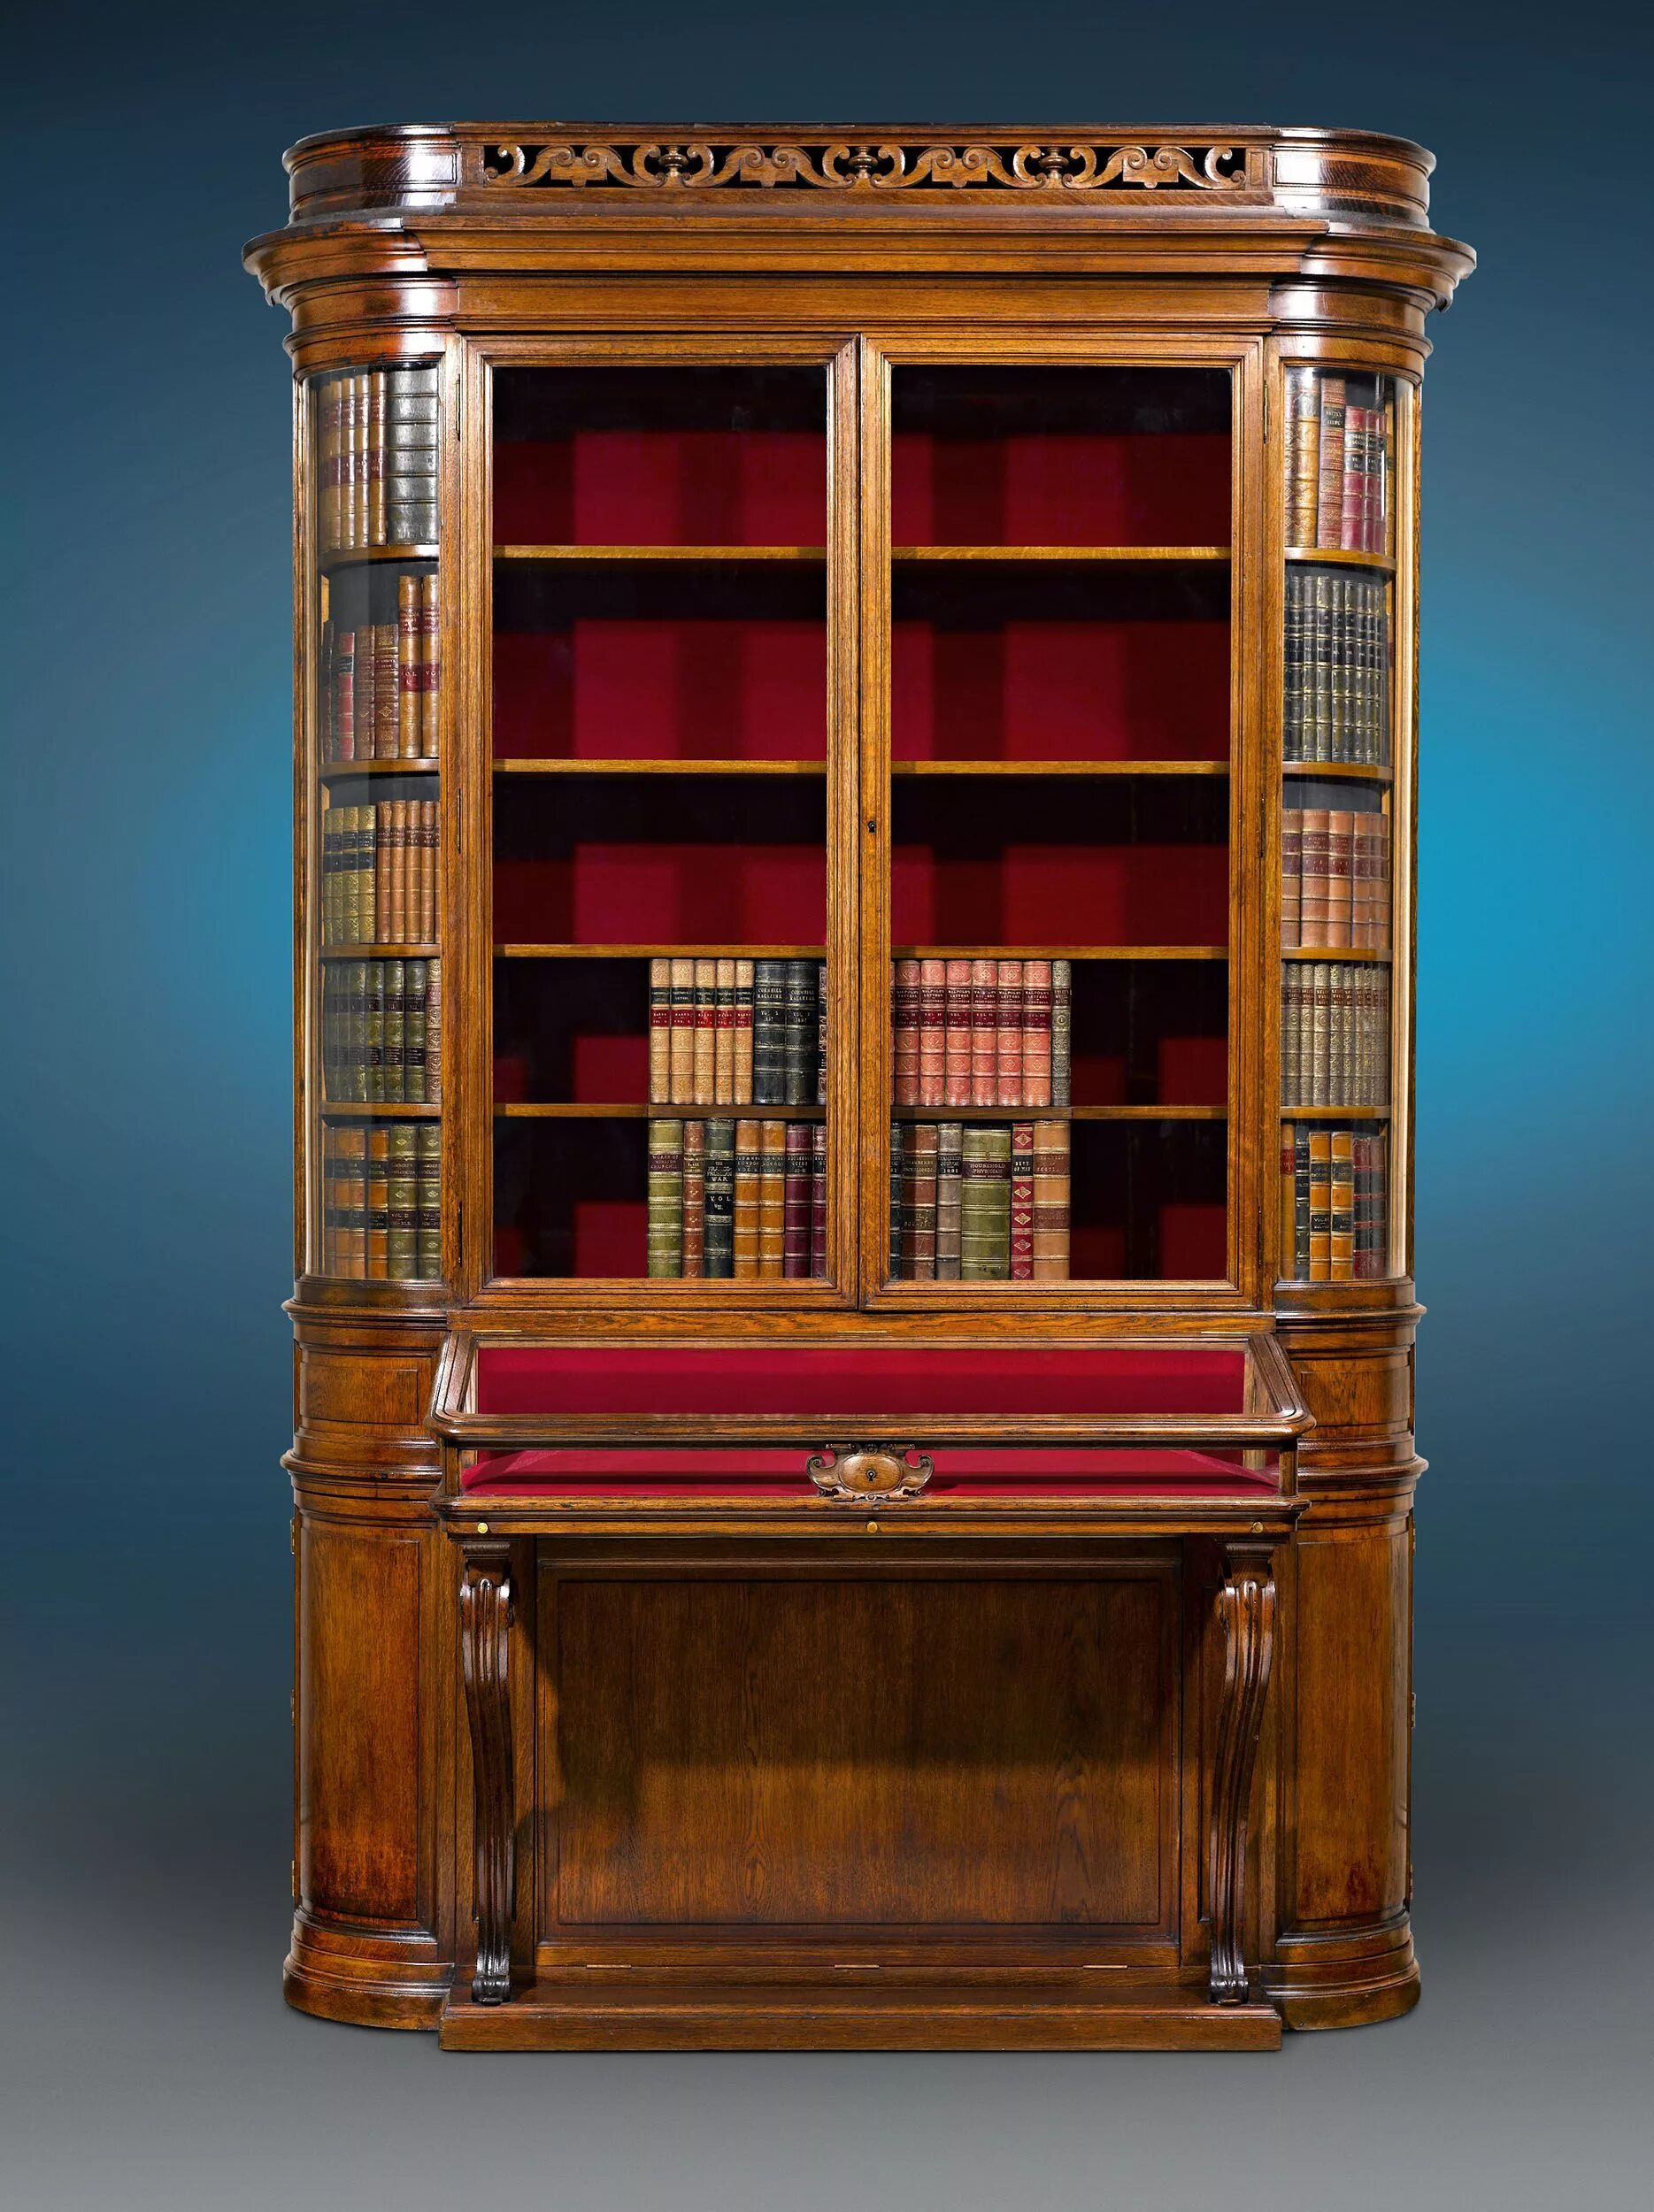 Книжный шкаф 19 век Викторианская. Книжный шкаф. Старый книжный шкаф. Антикварный книжный шкаф. Старинный книжный шкаф